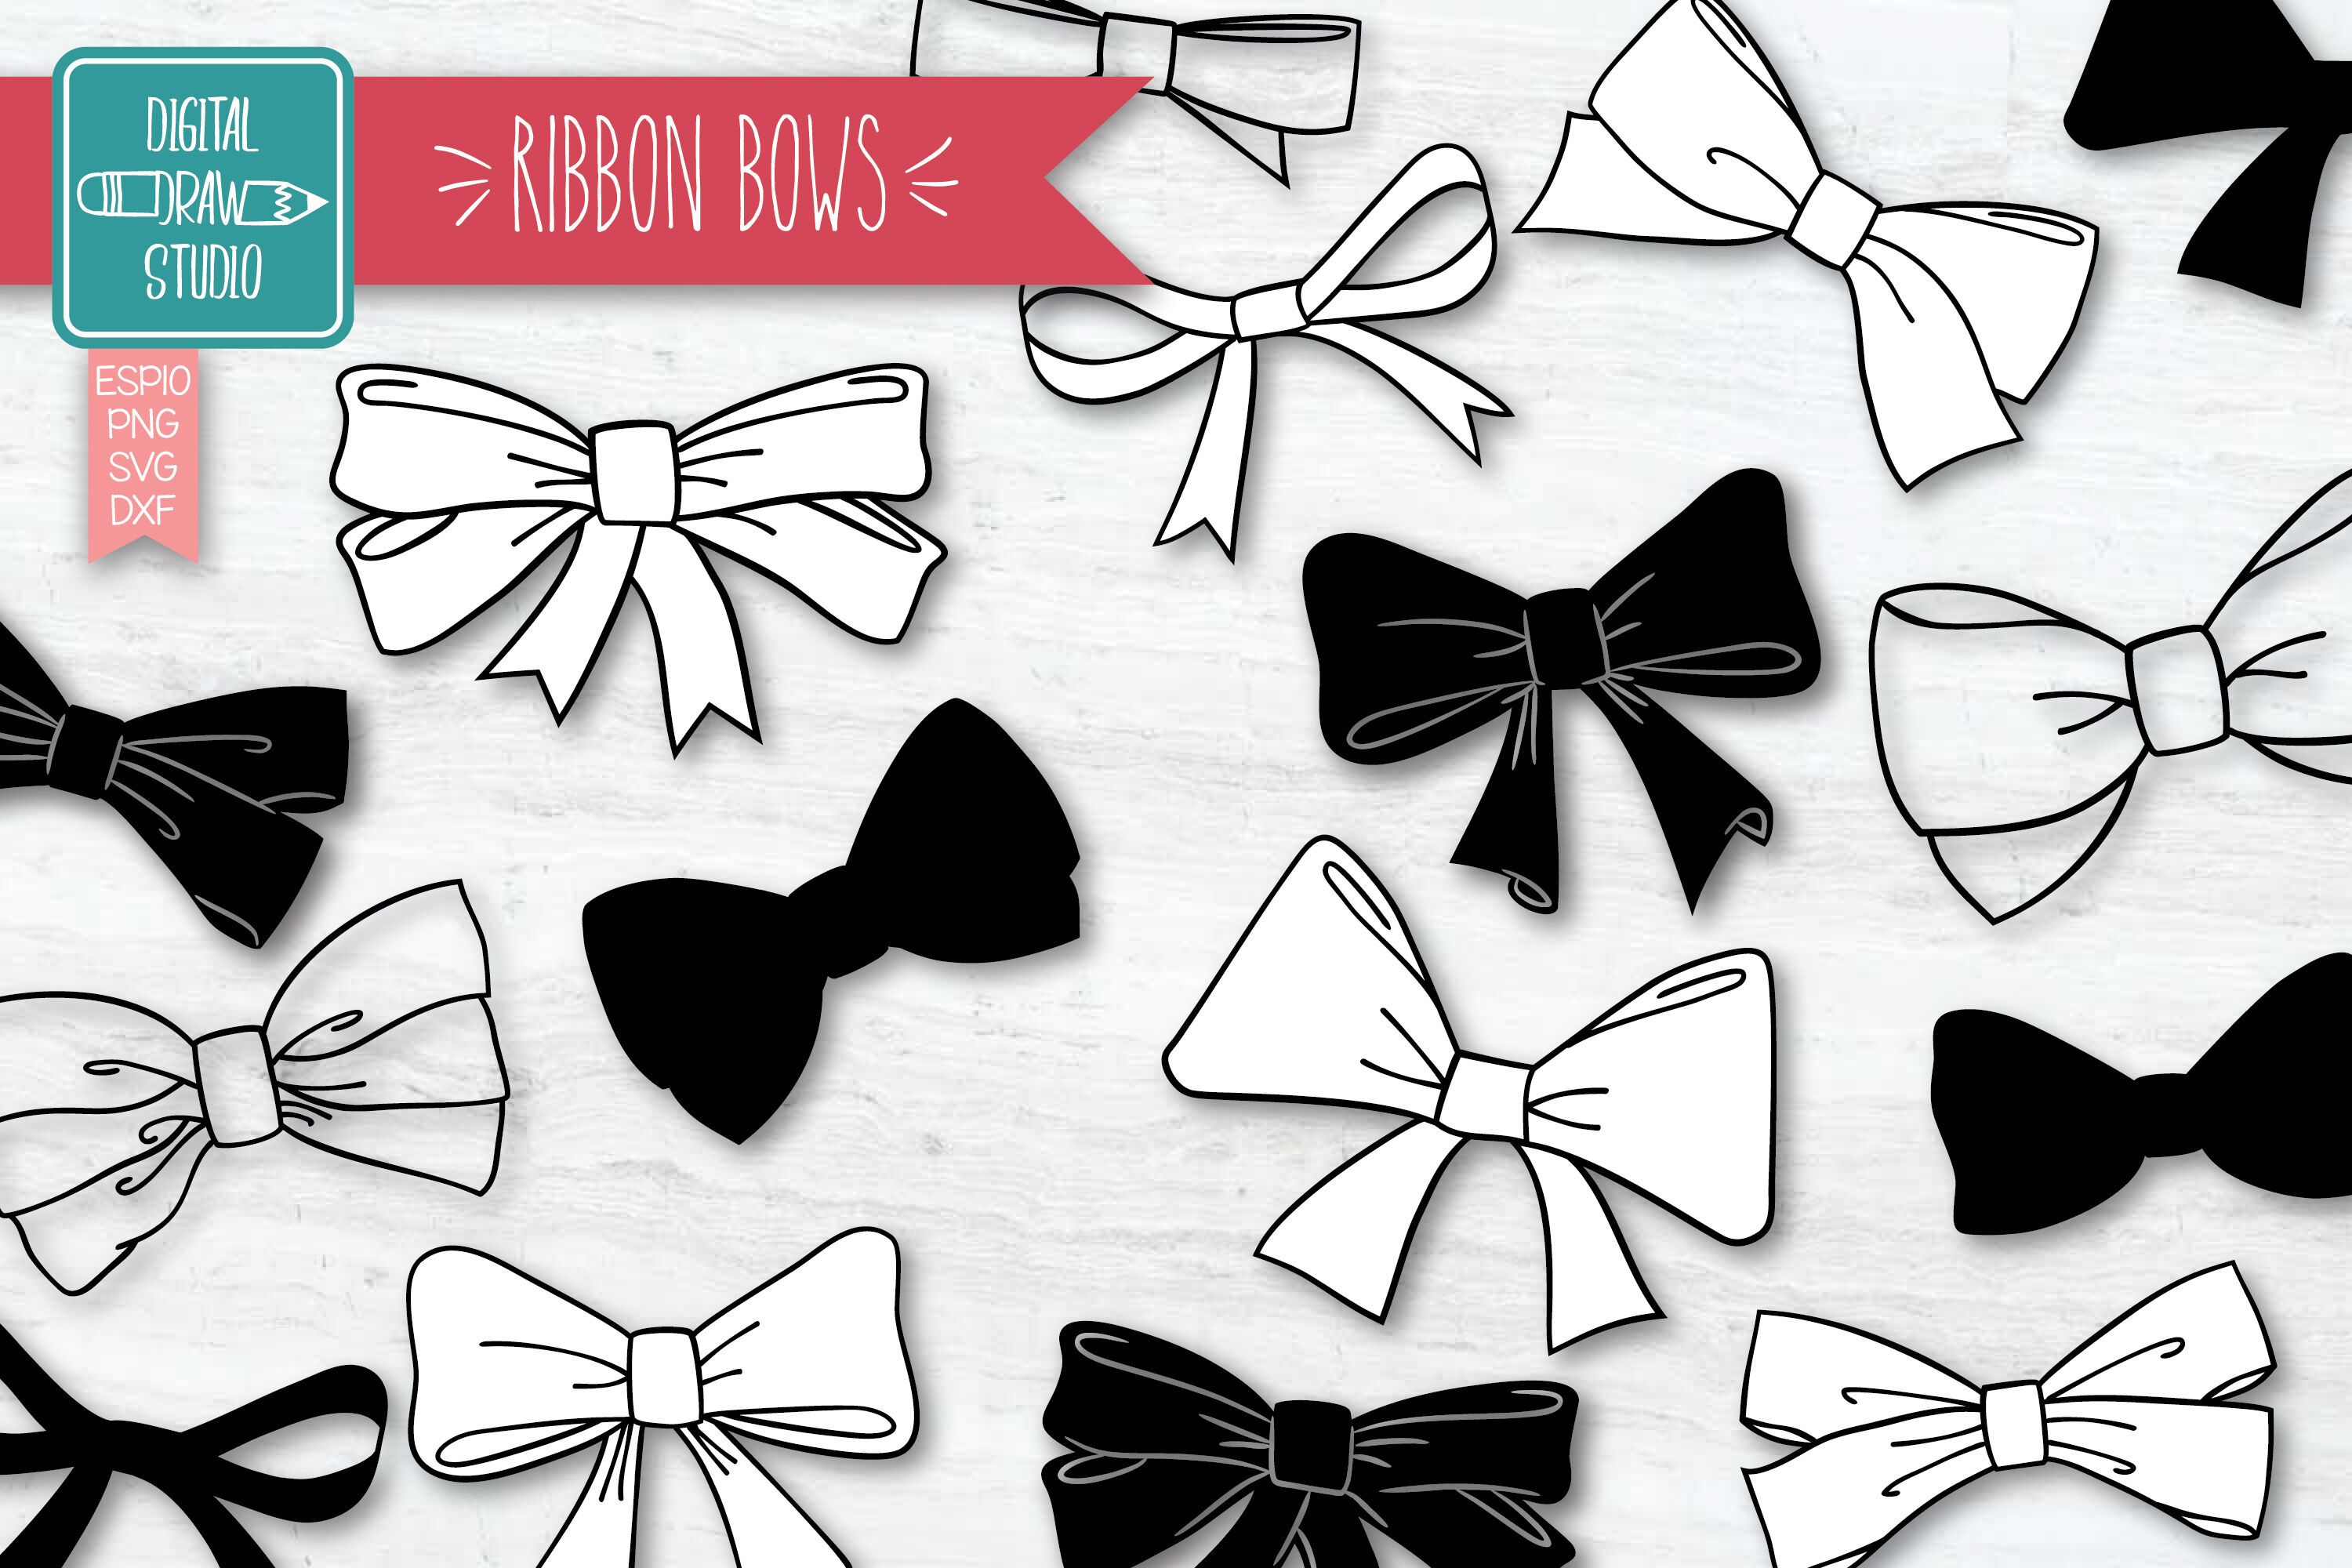 Hand Drawn Bows Bow Tie Illustration Ribbon Fashion Accessories By Digital Draw Studio Thehungryjpeg Com